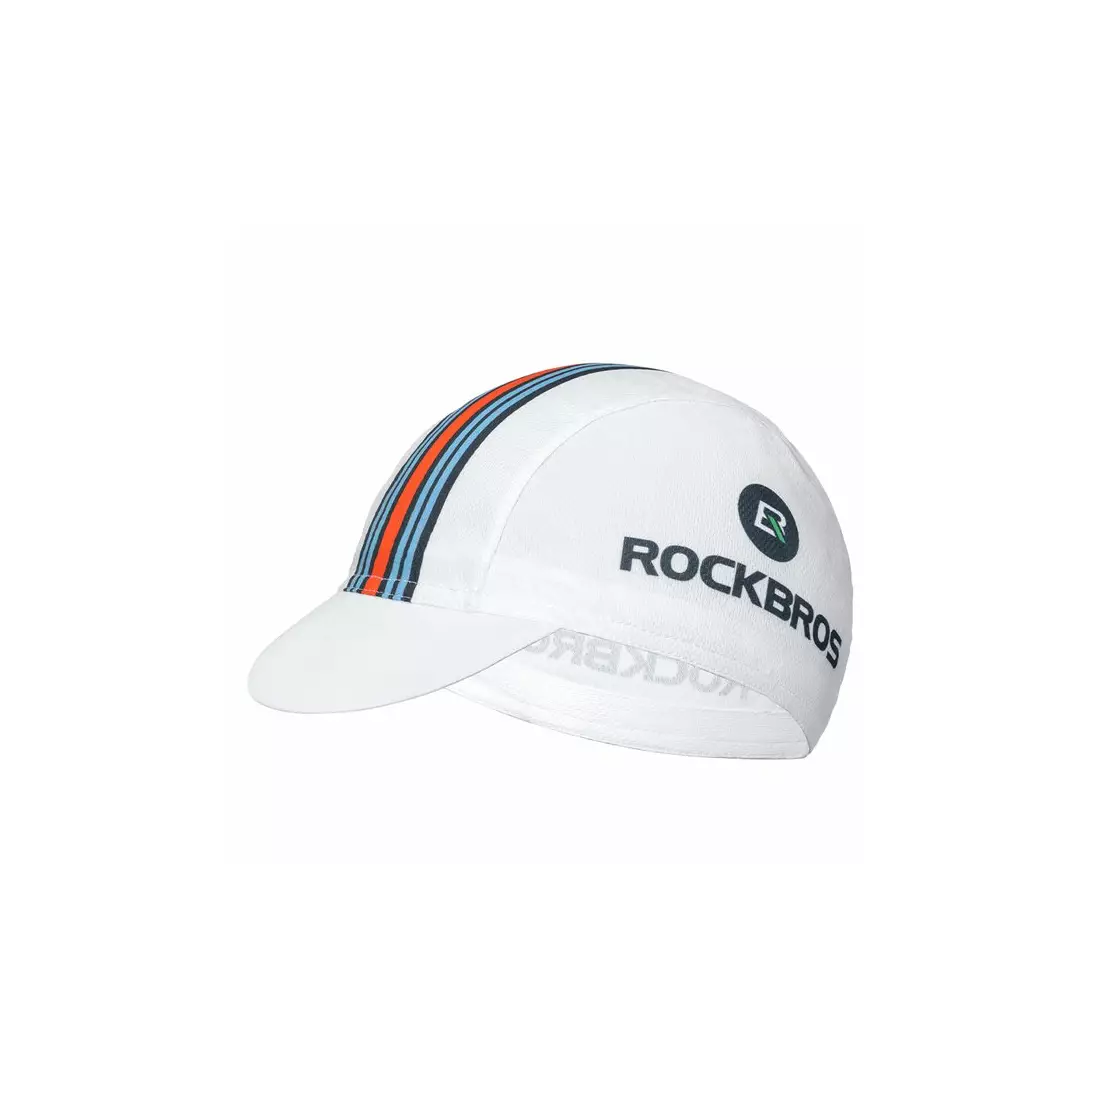 Rockbros cycling cap, white MZ10022